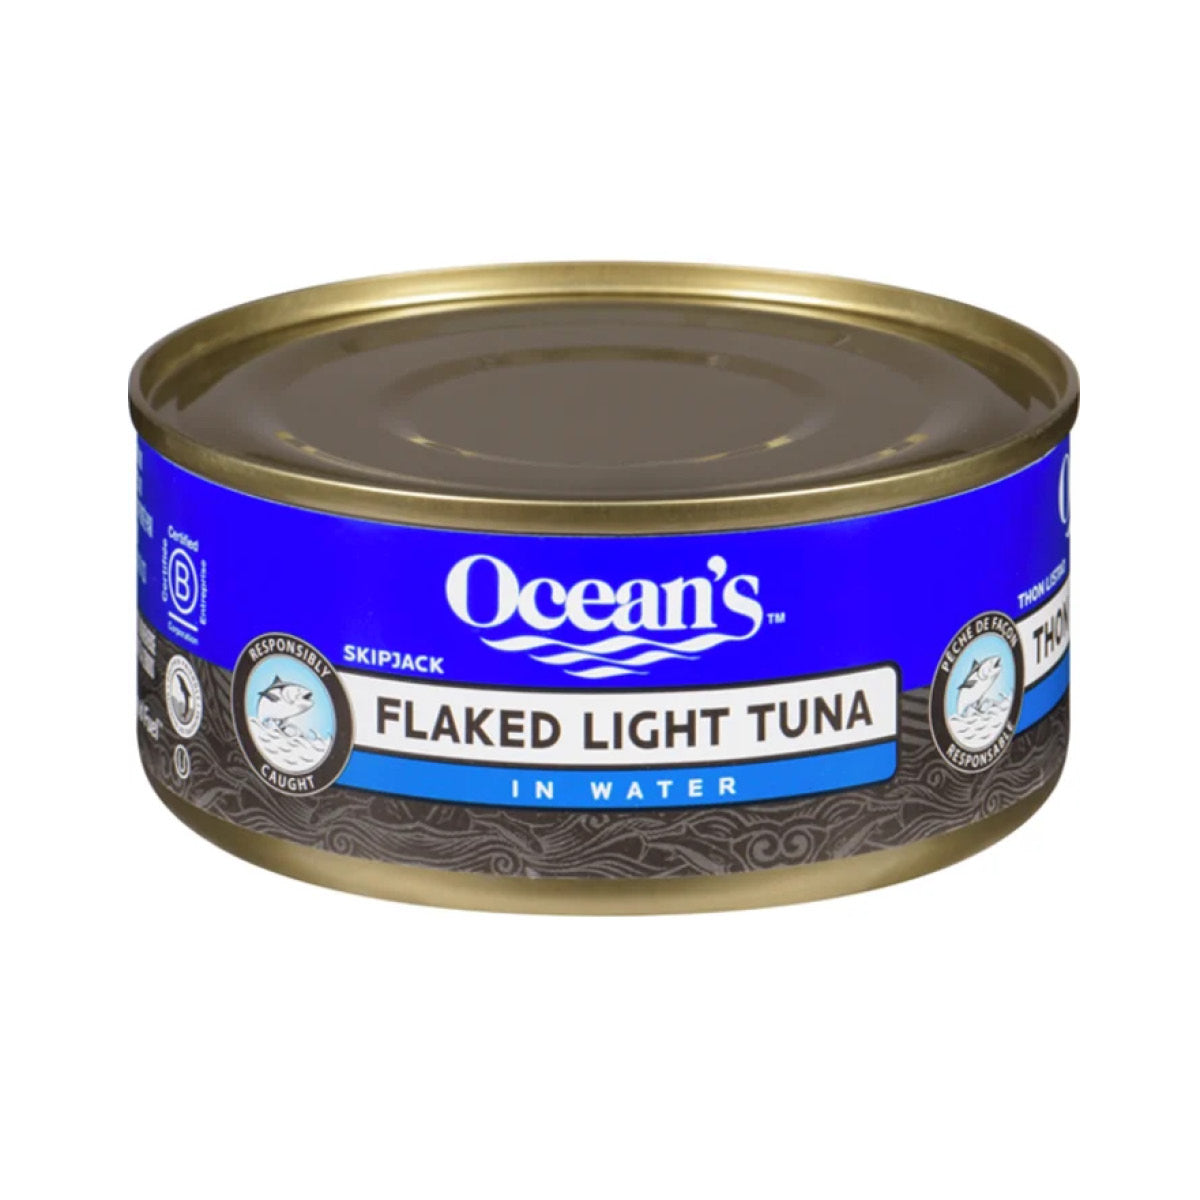 Ocean Flaked Light Tuna in Water, 170g